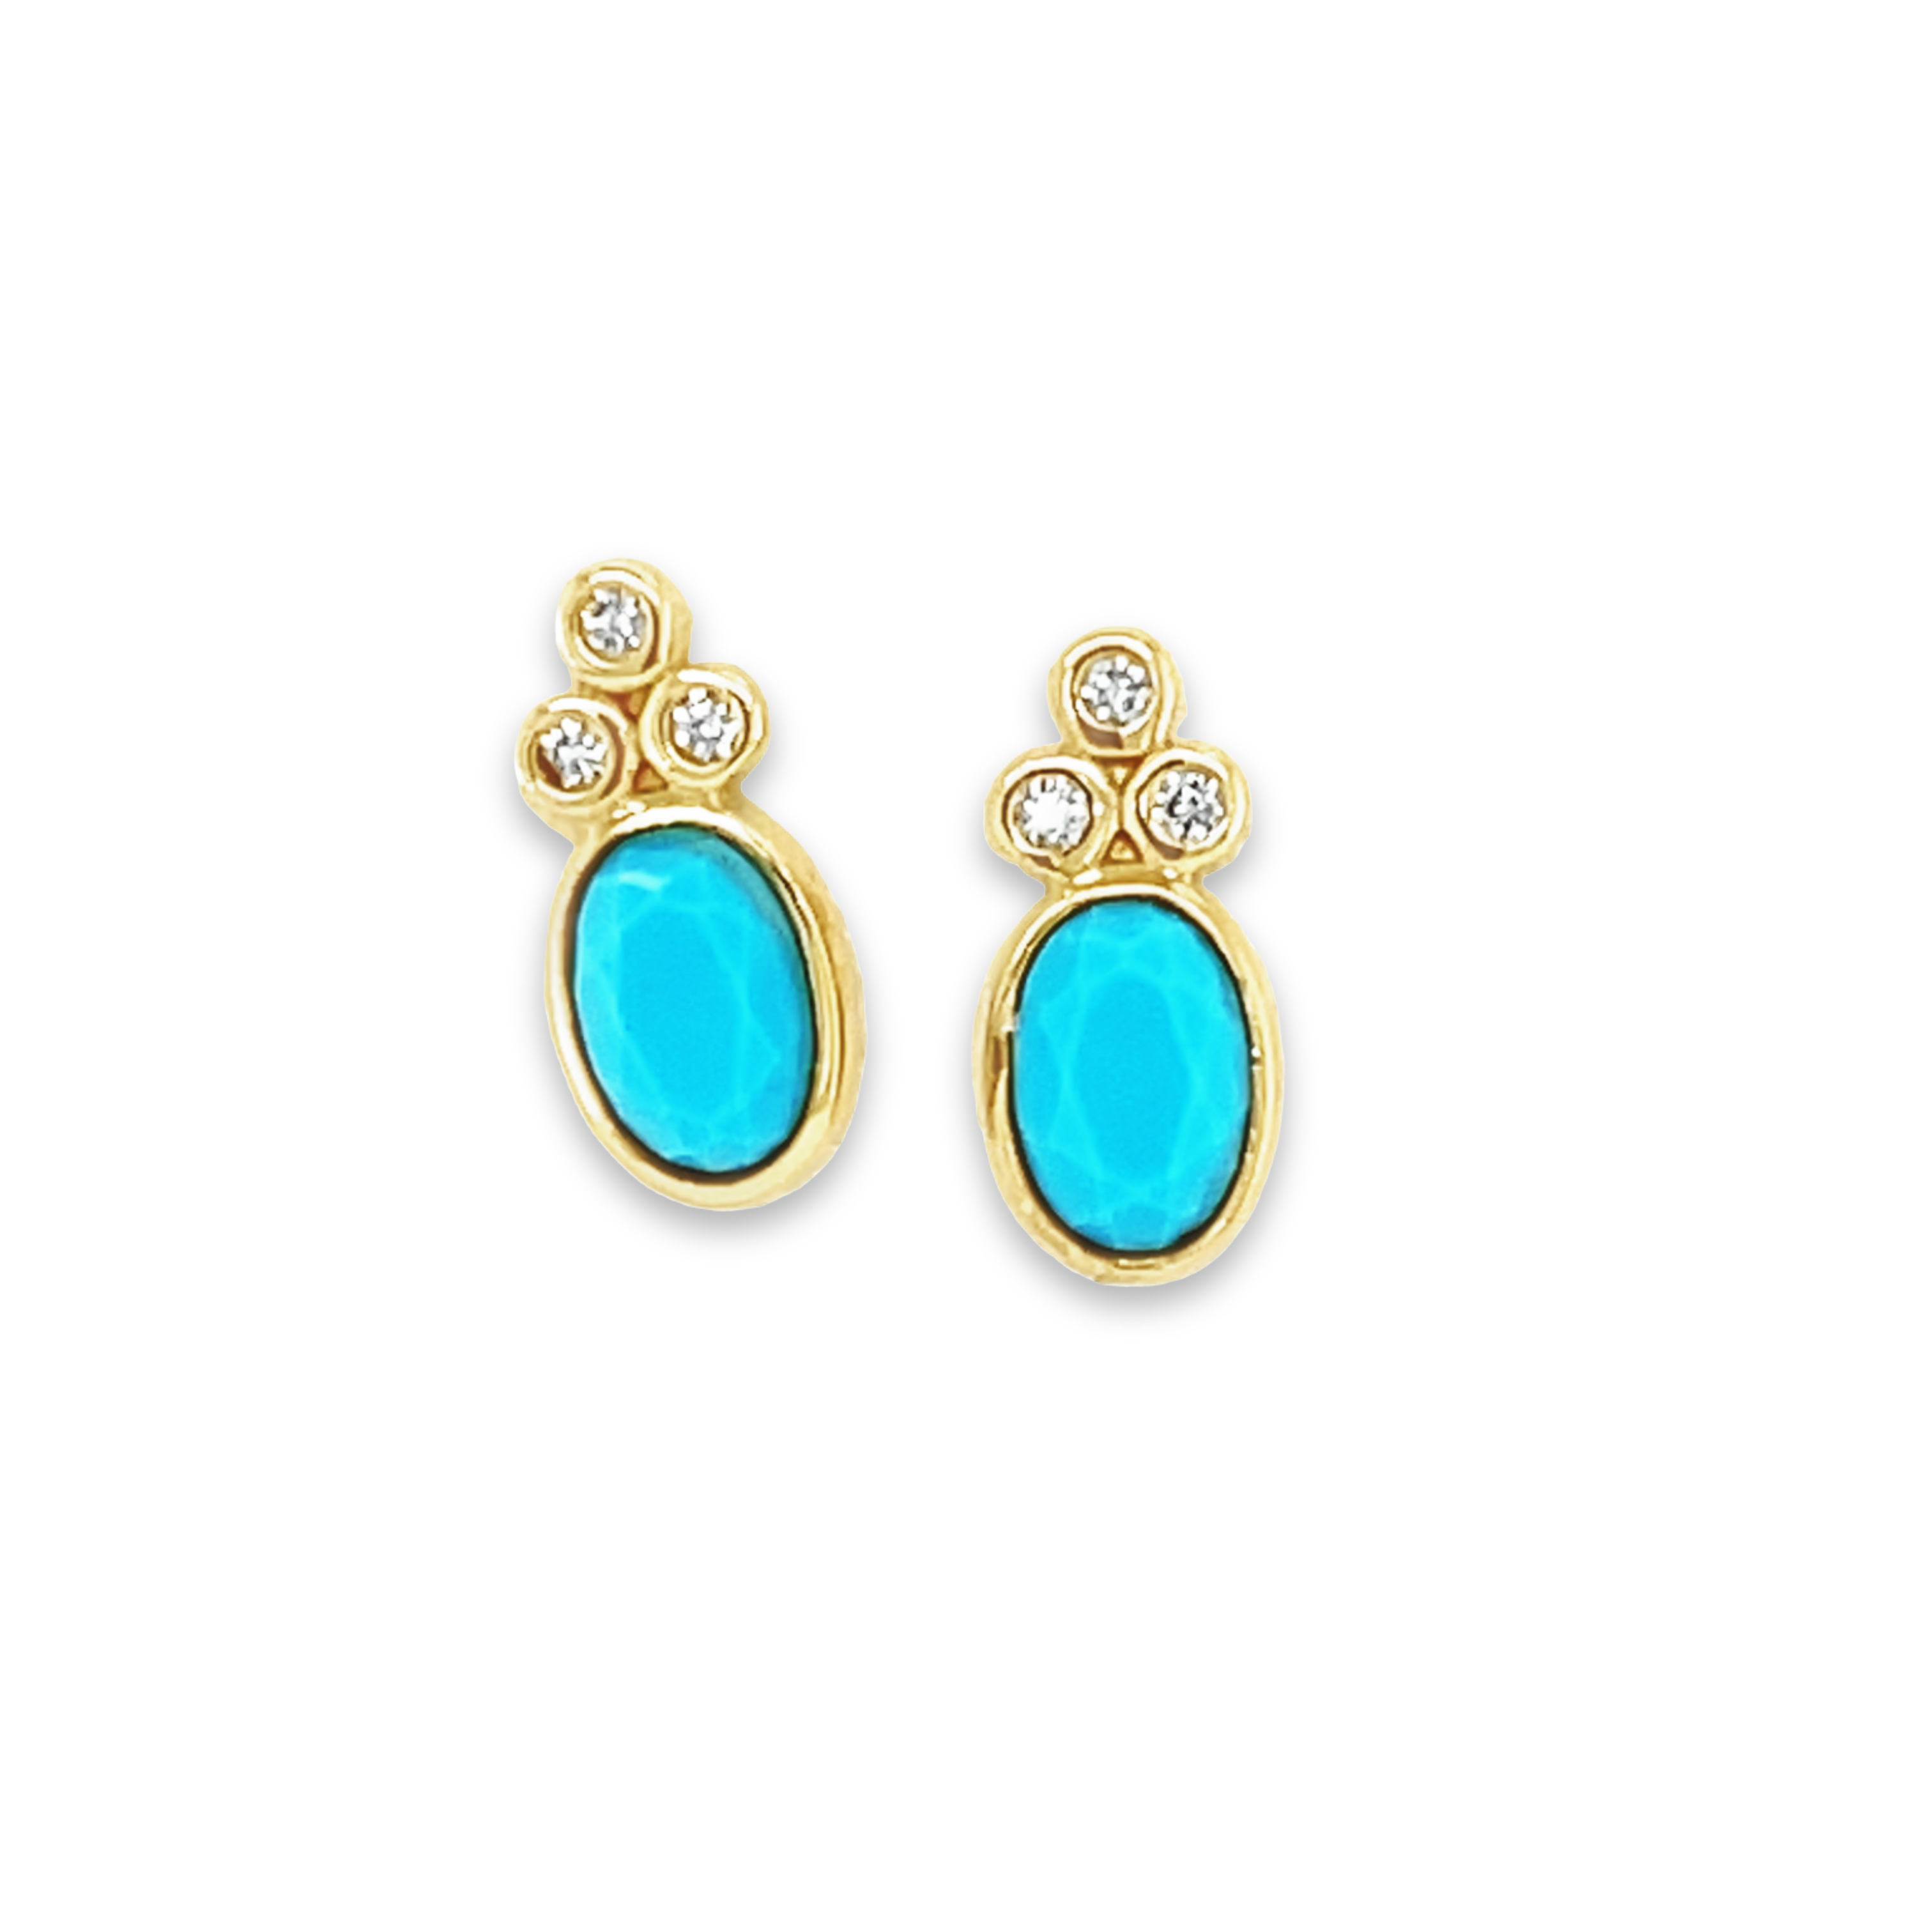 Featured image for “Bezeled Diamond Embellished Turquoise Earrings”